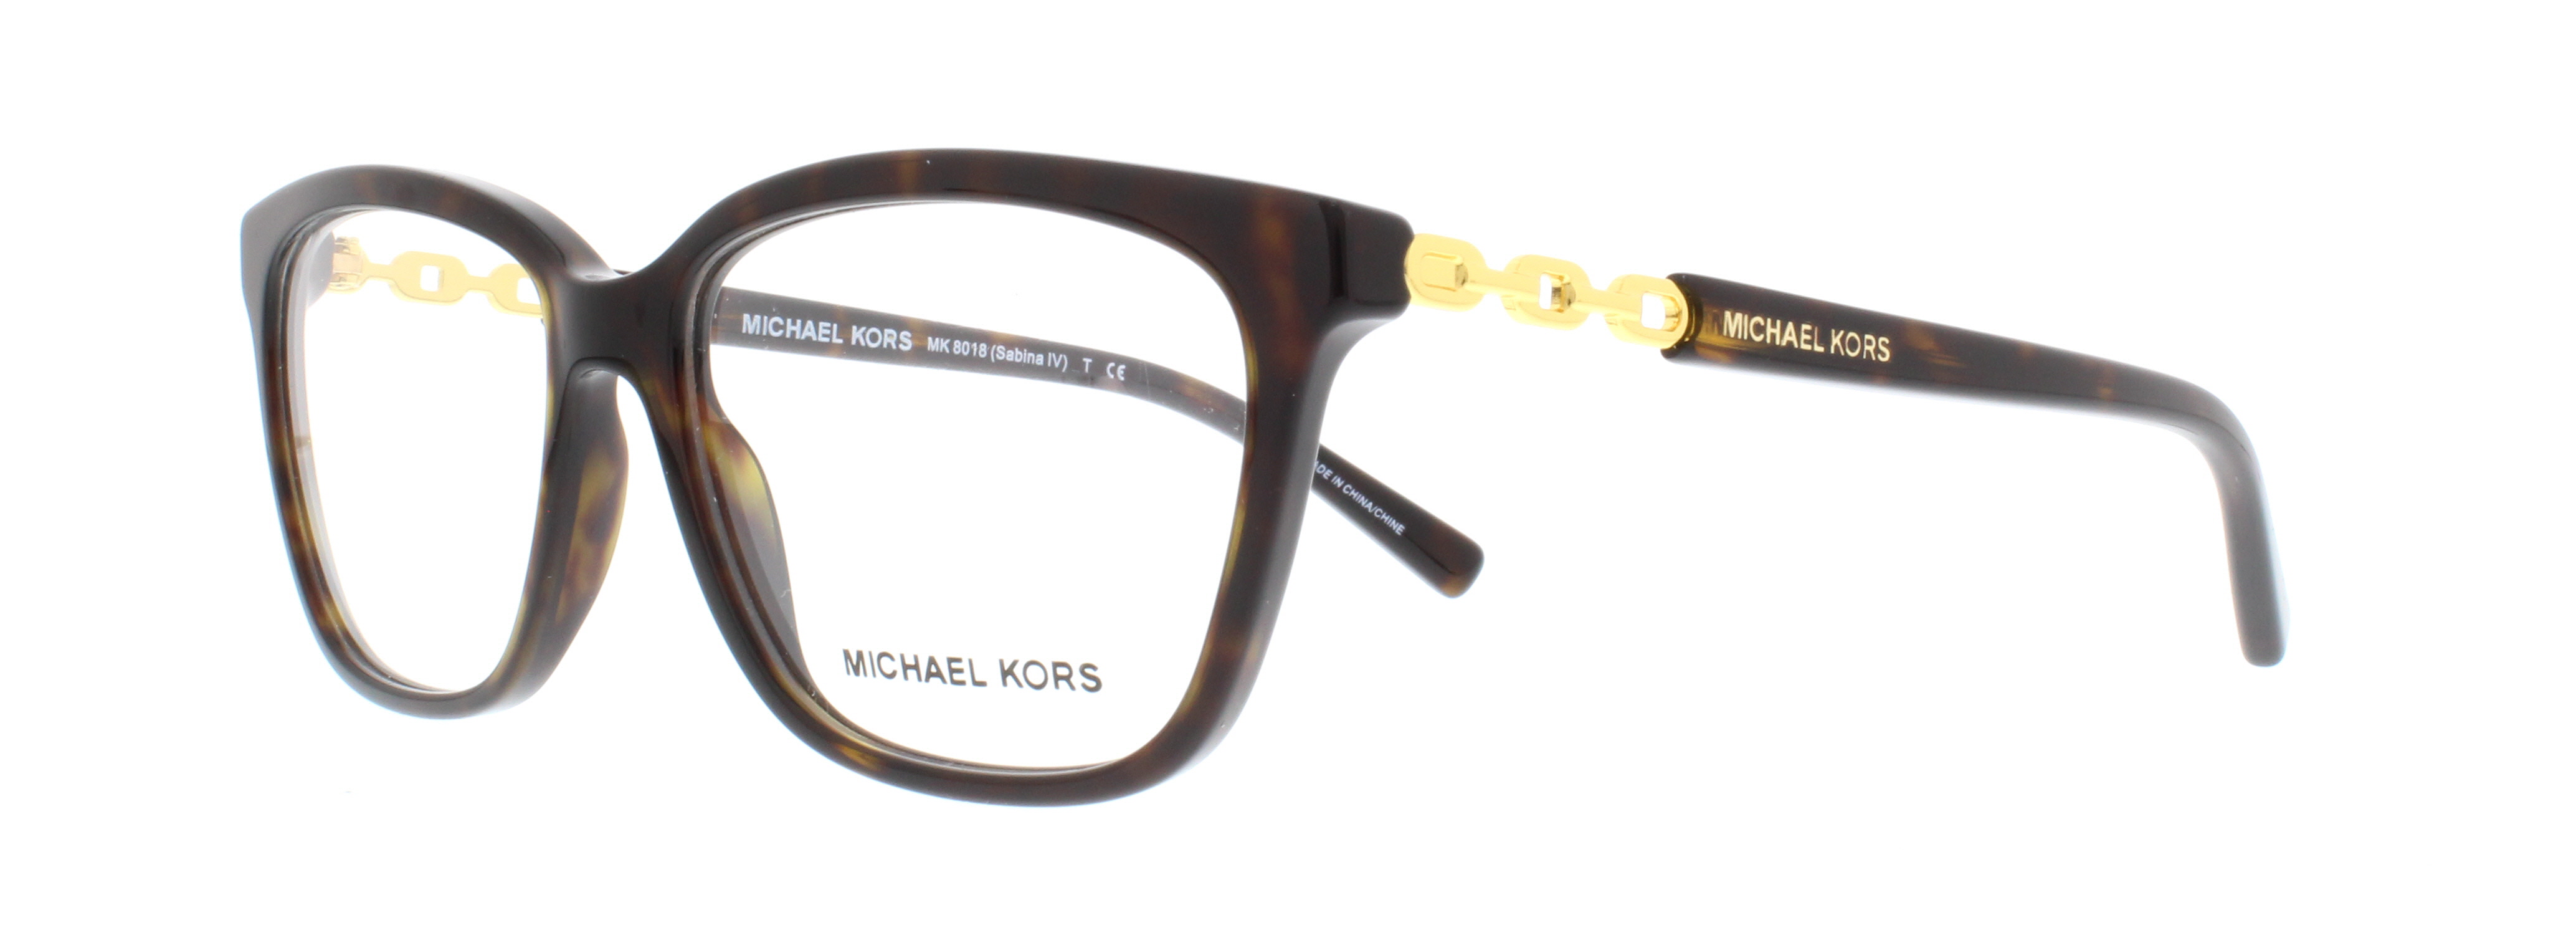 Michael Kors Prescription Glasses  Authentic  GlassesOnWeb